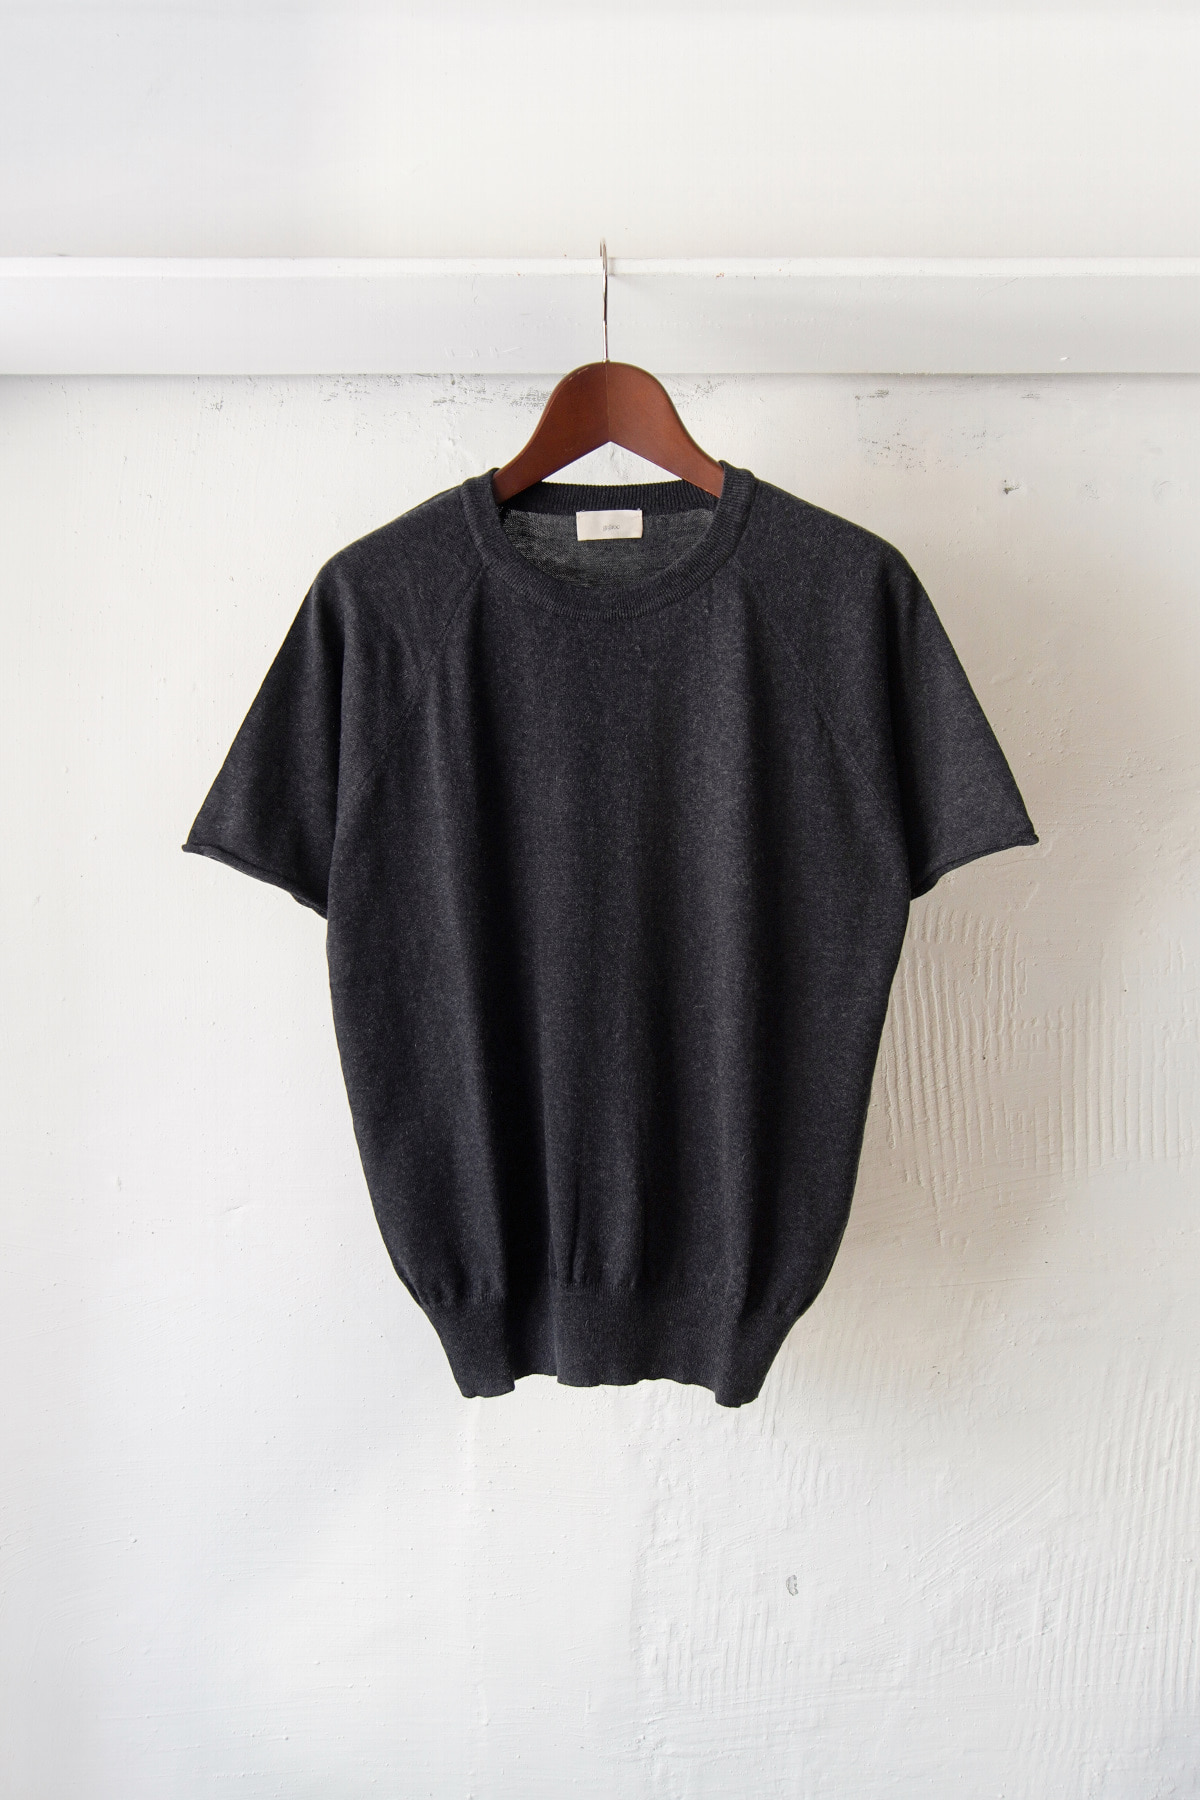 [GAJIROC] Cut-Off Sweater - Charcoal